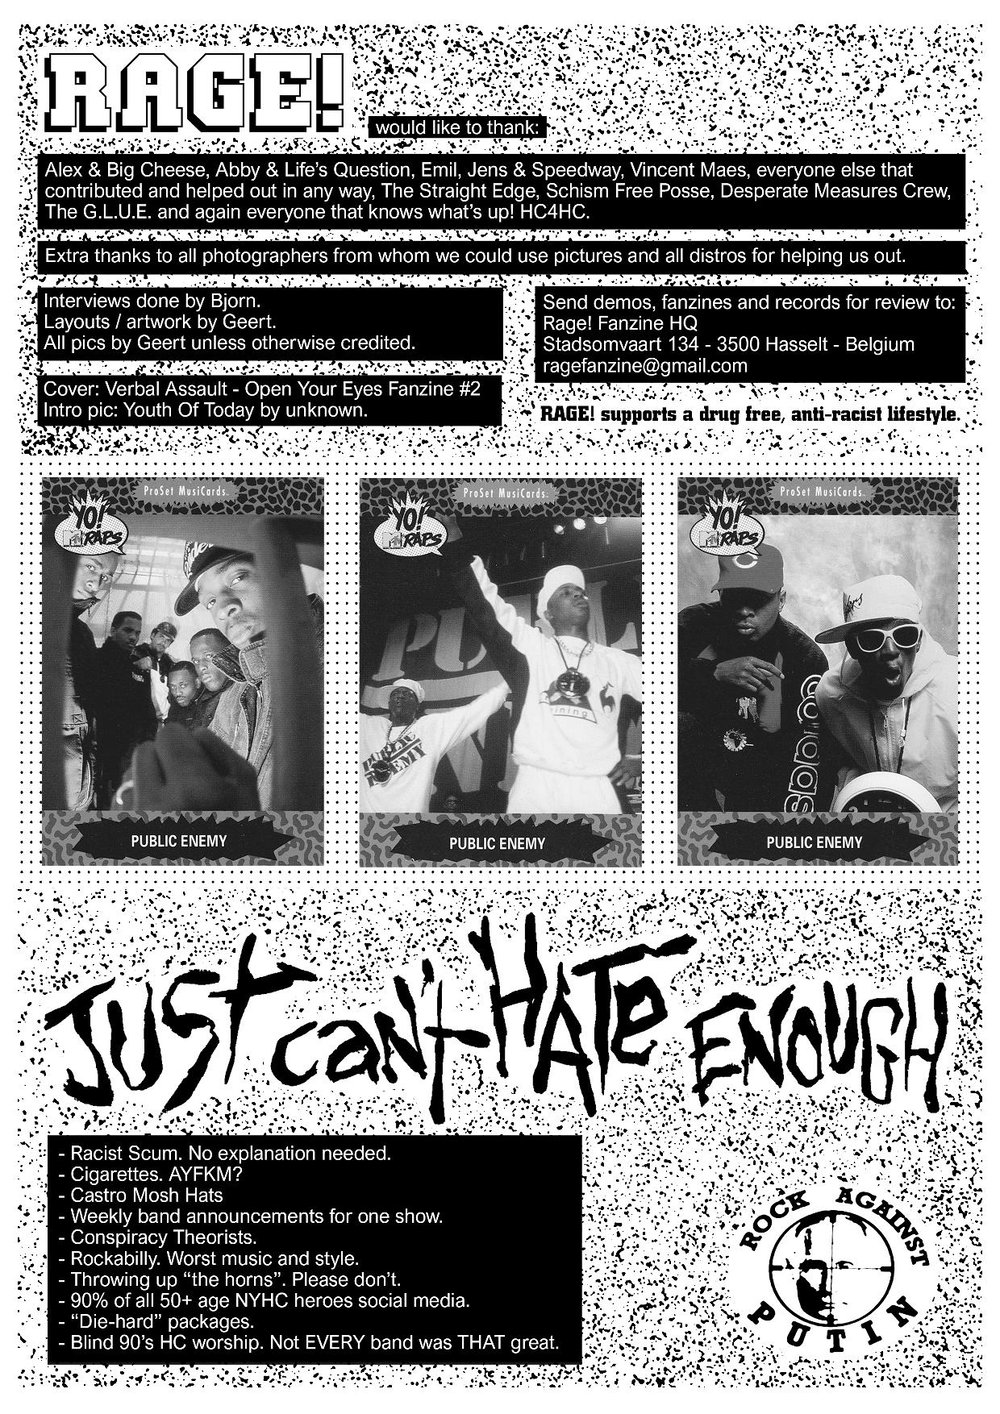 Rage! Hardcore Fanzine - #3